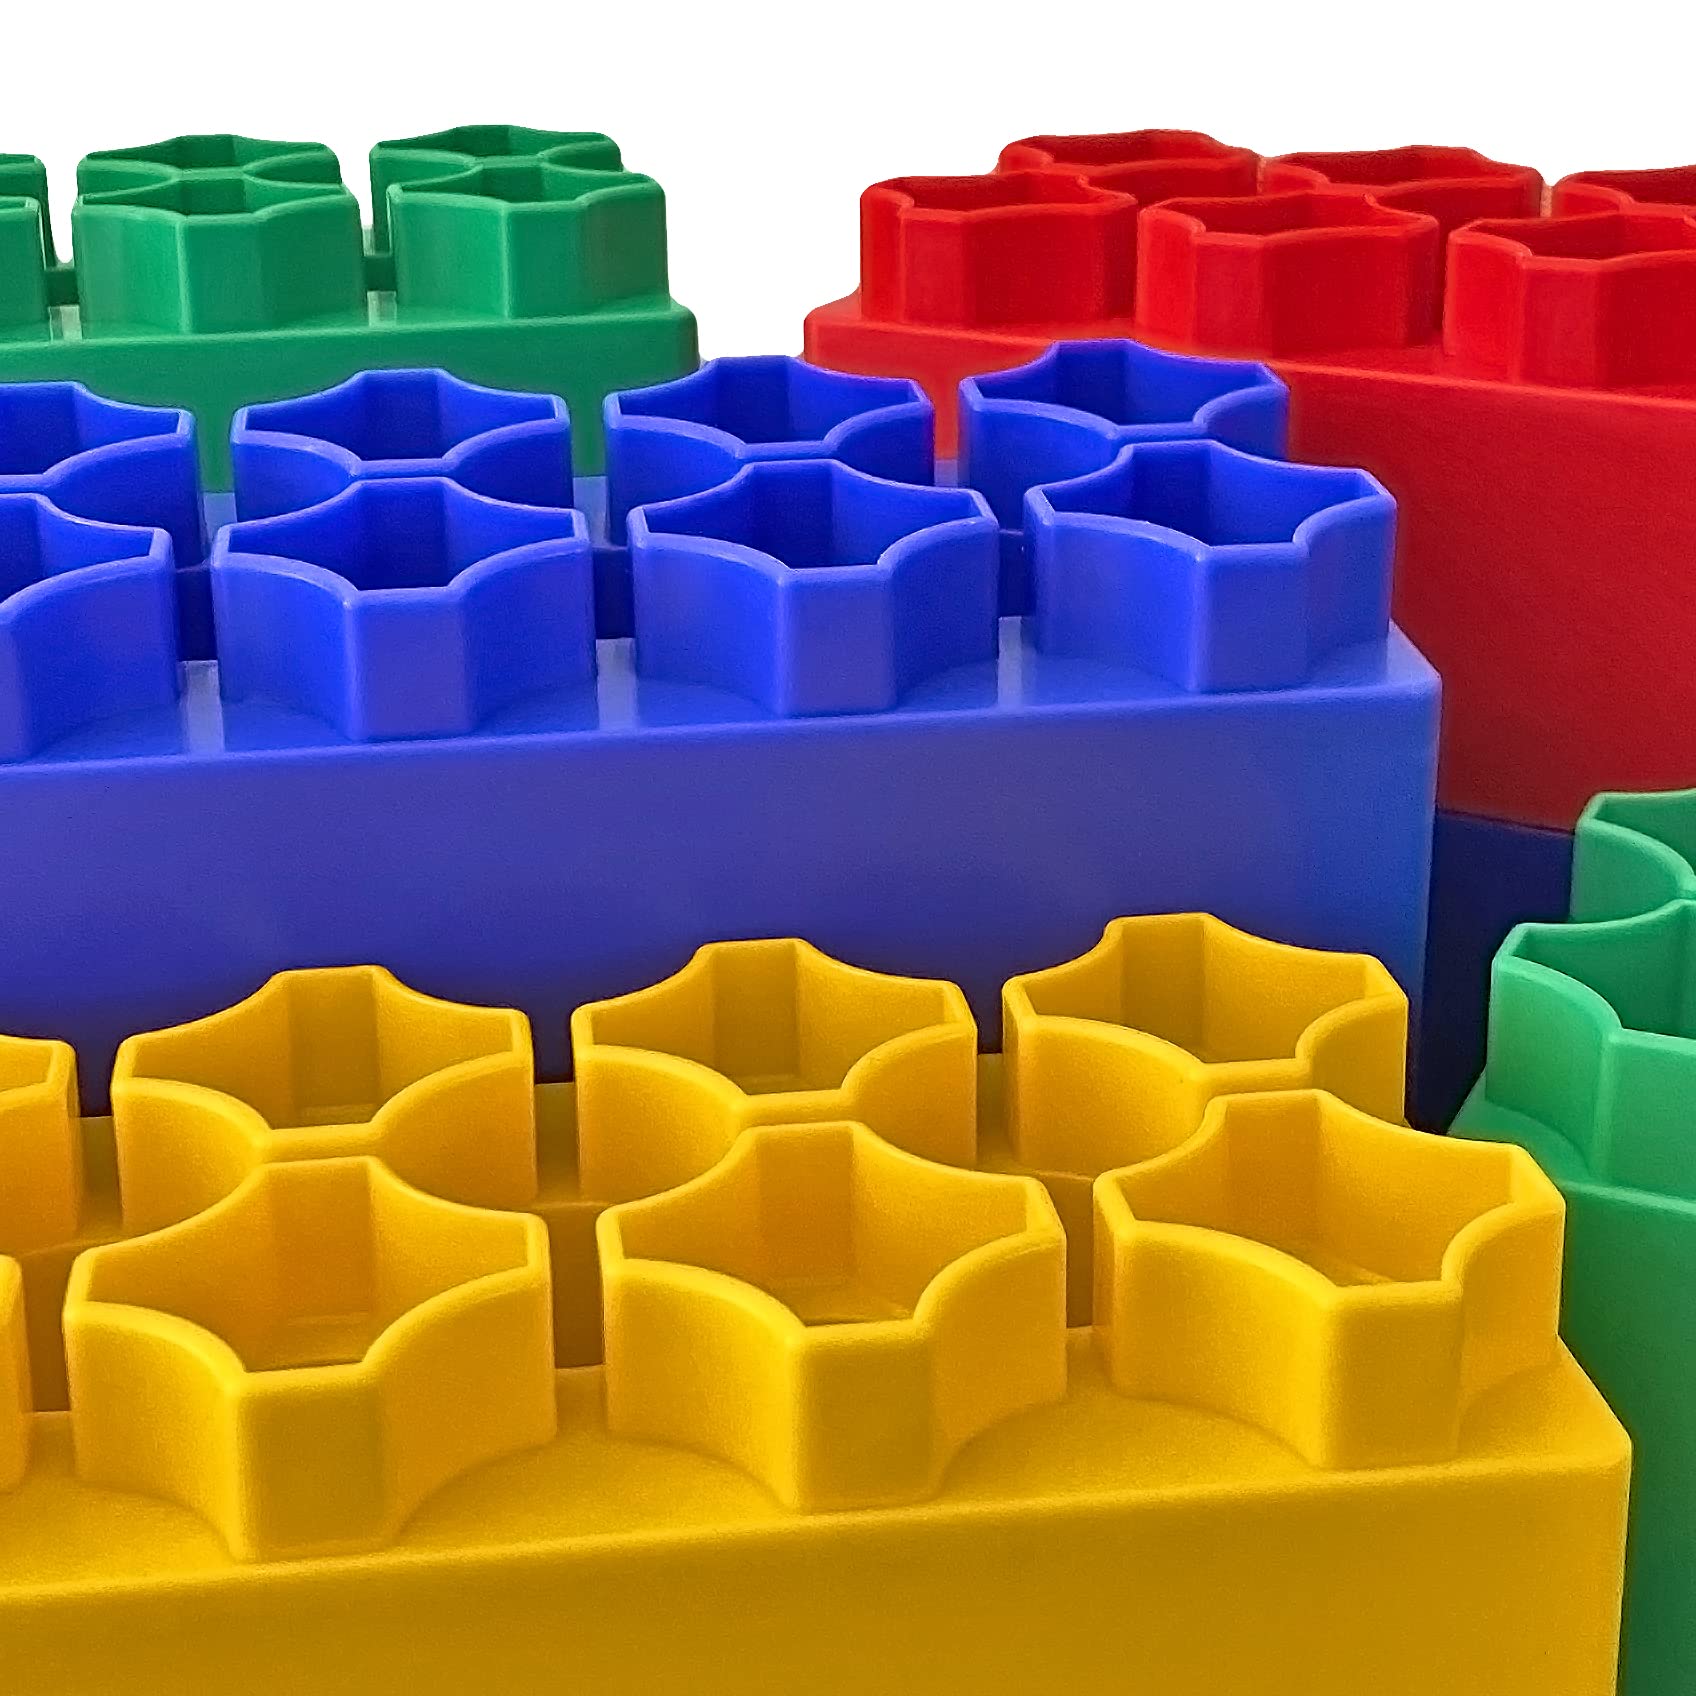 Jumbo Blocks - (192) Piece Big Blocks - 8